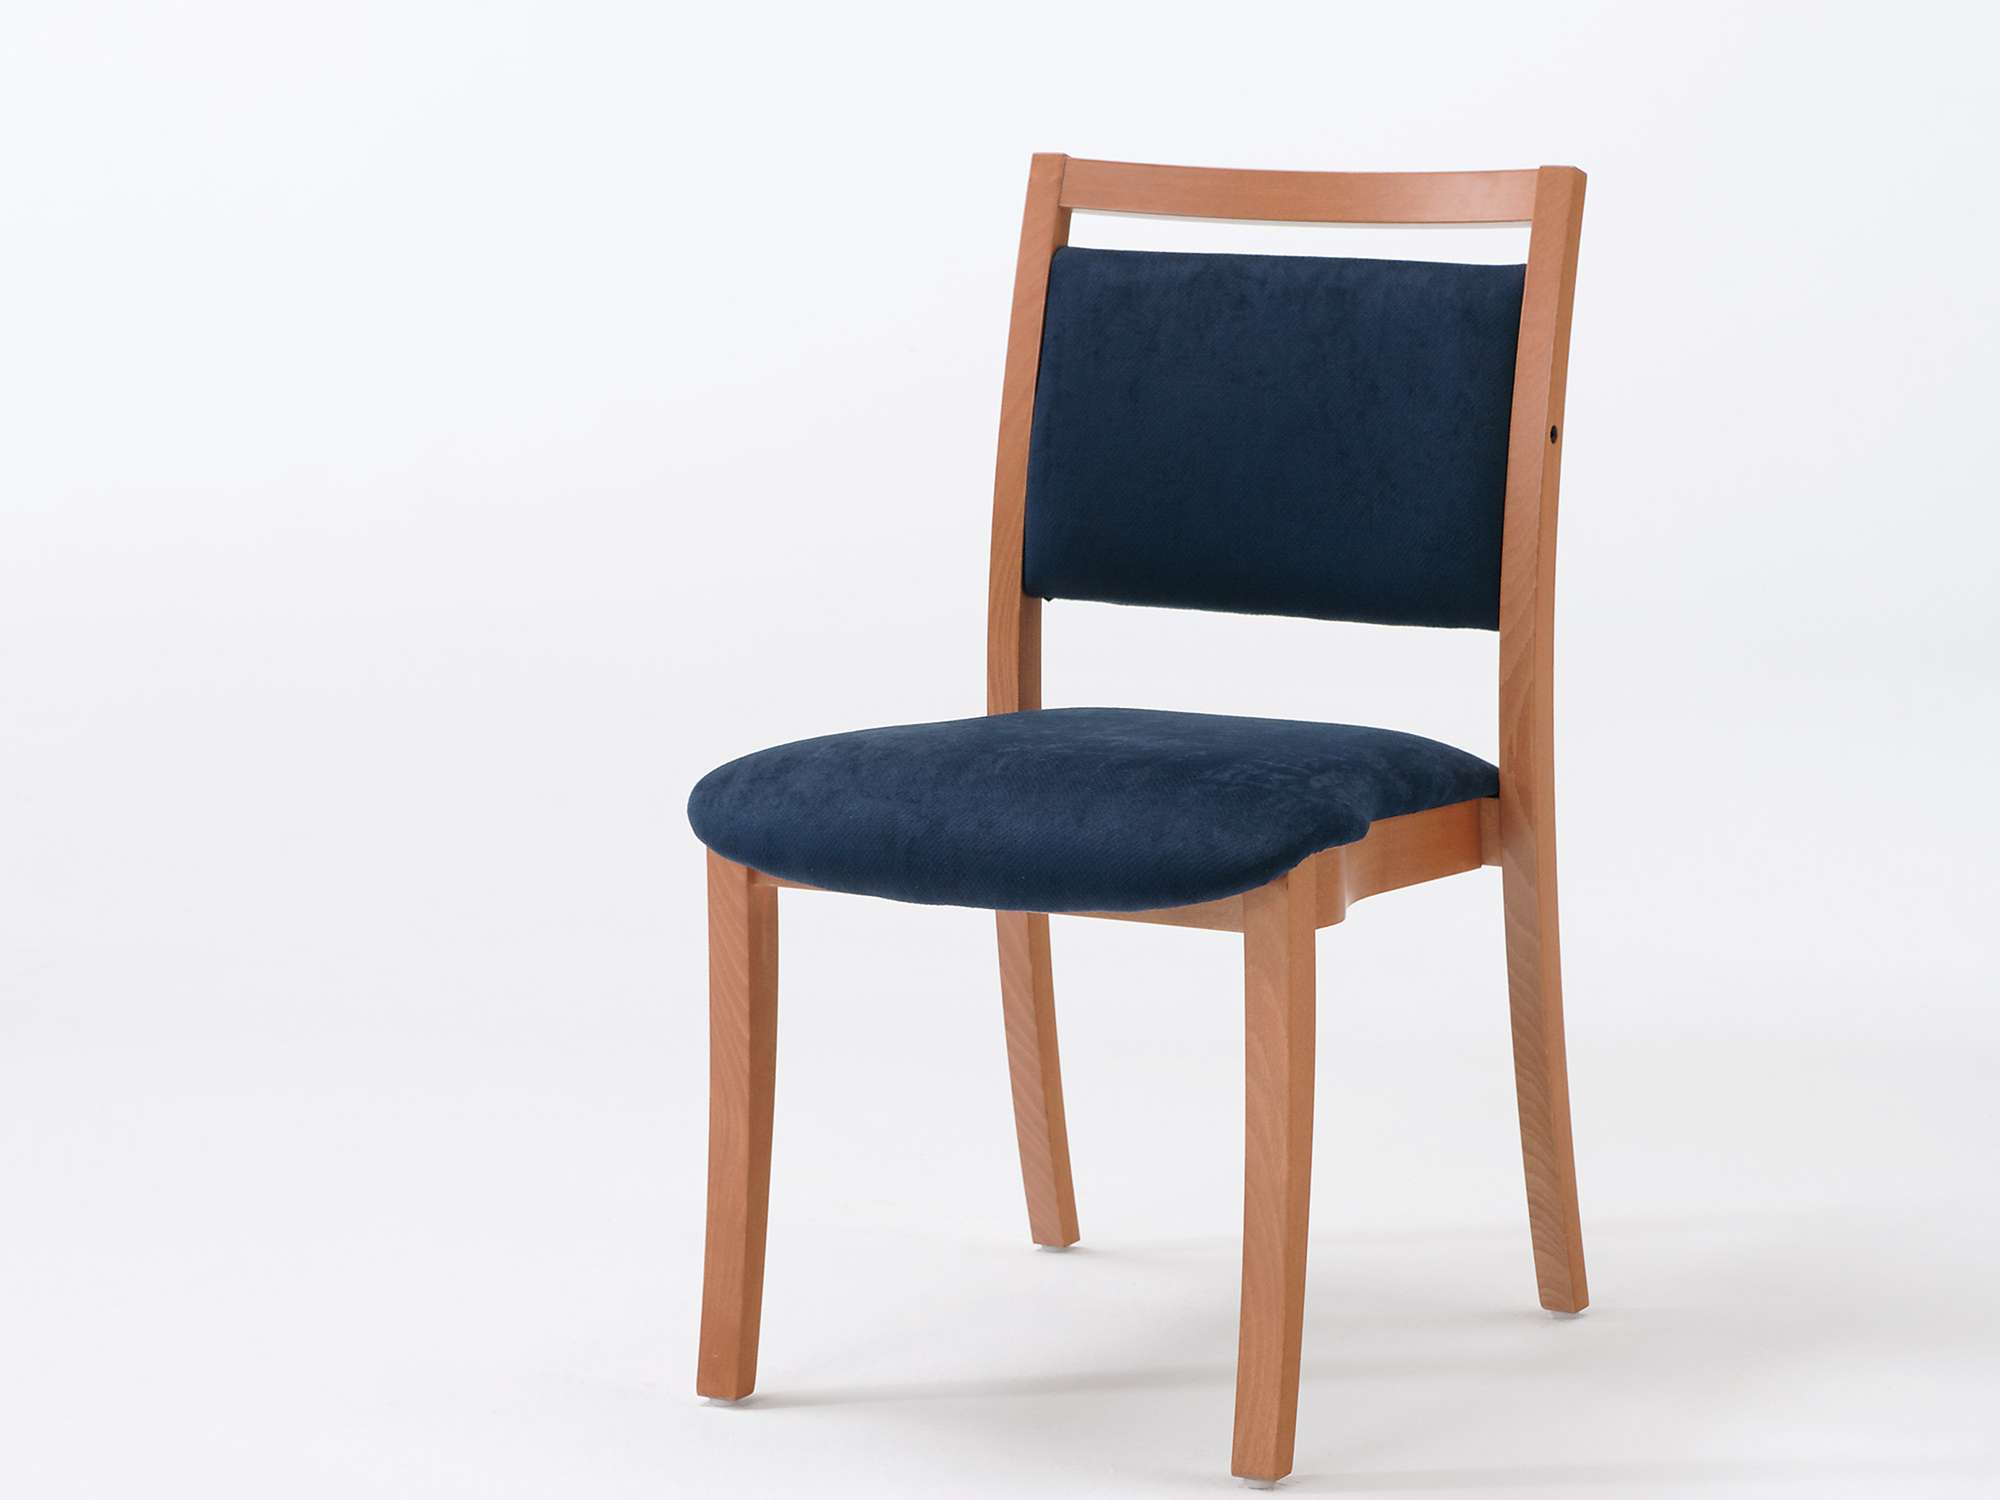 Model Sedego als stapelbare stoel met handgreep